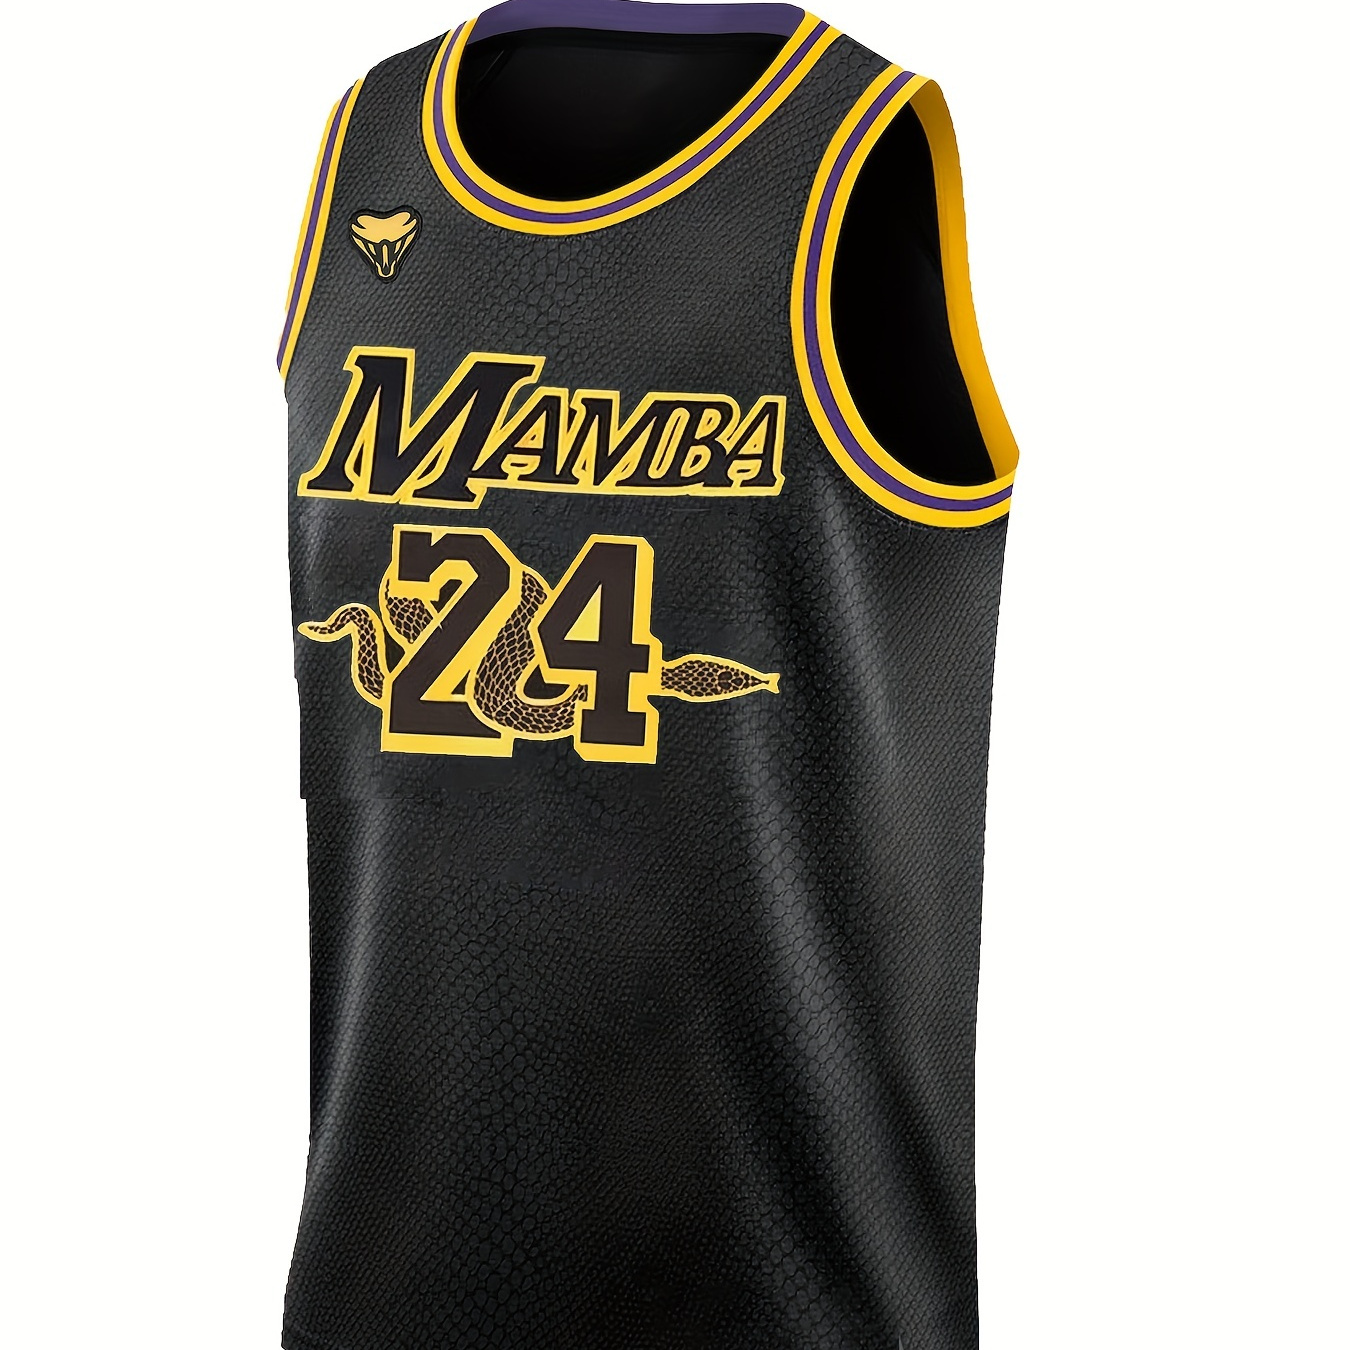 

Men's Mamba #8 #24 Basketball Jersey, Retro Classic Black Basketball Shirt, Embroidery Tank Top For Sports Uniform